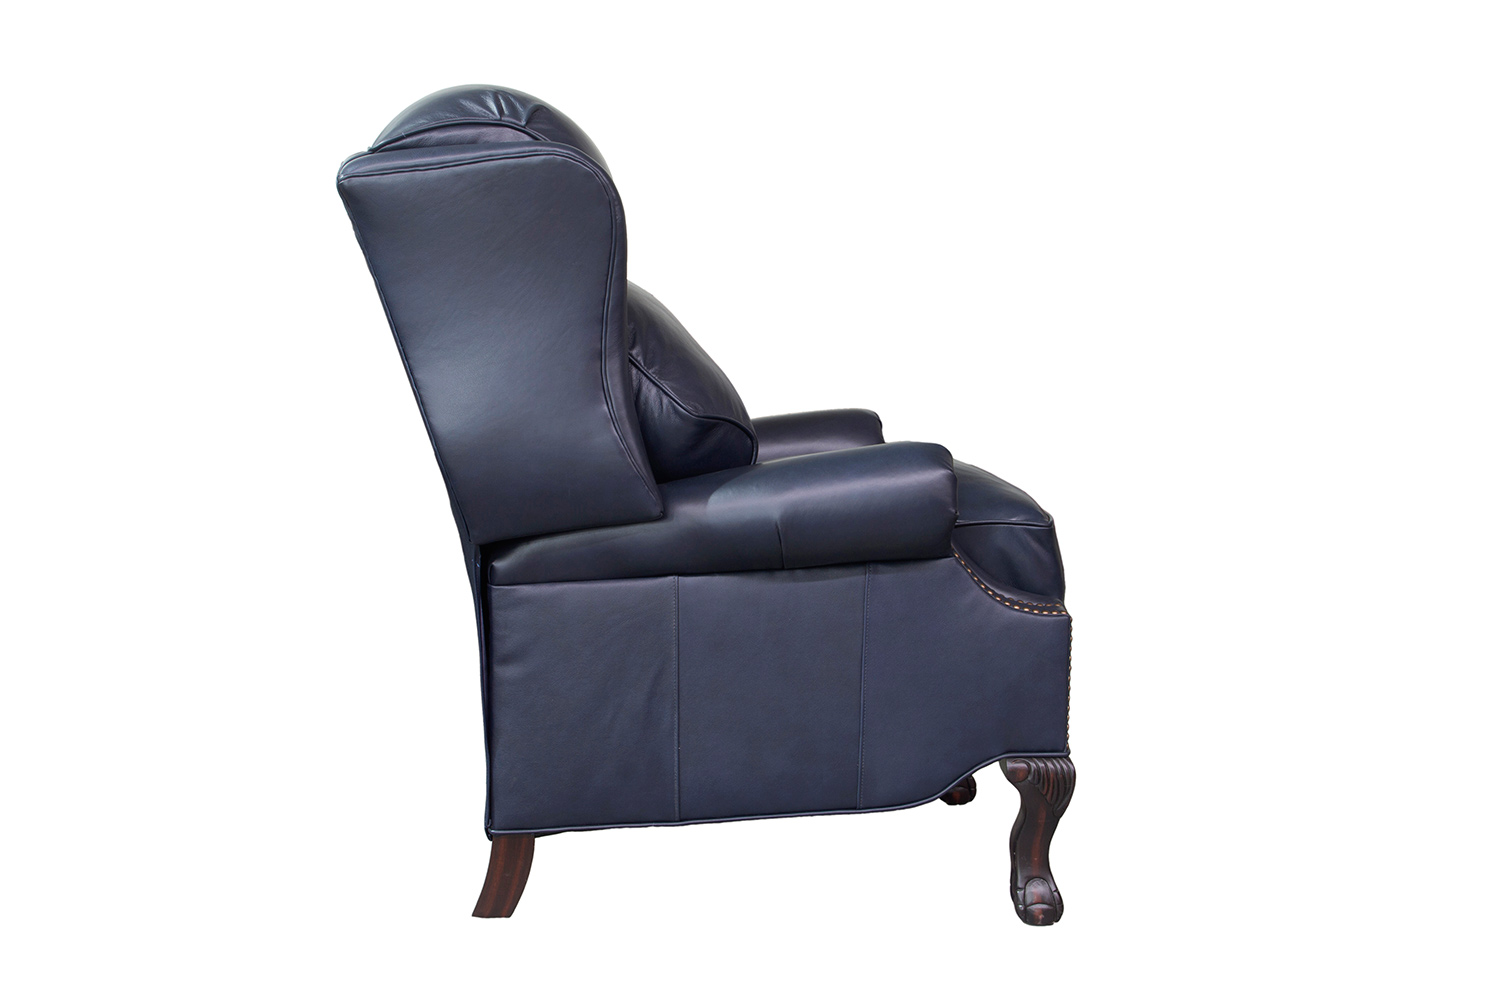 Barcalounger Danbury Recliner Chair - Shoreham Blue/All Leather